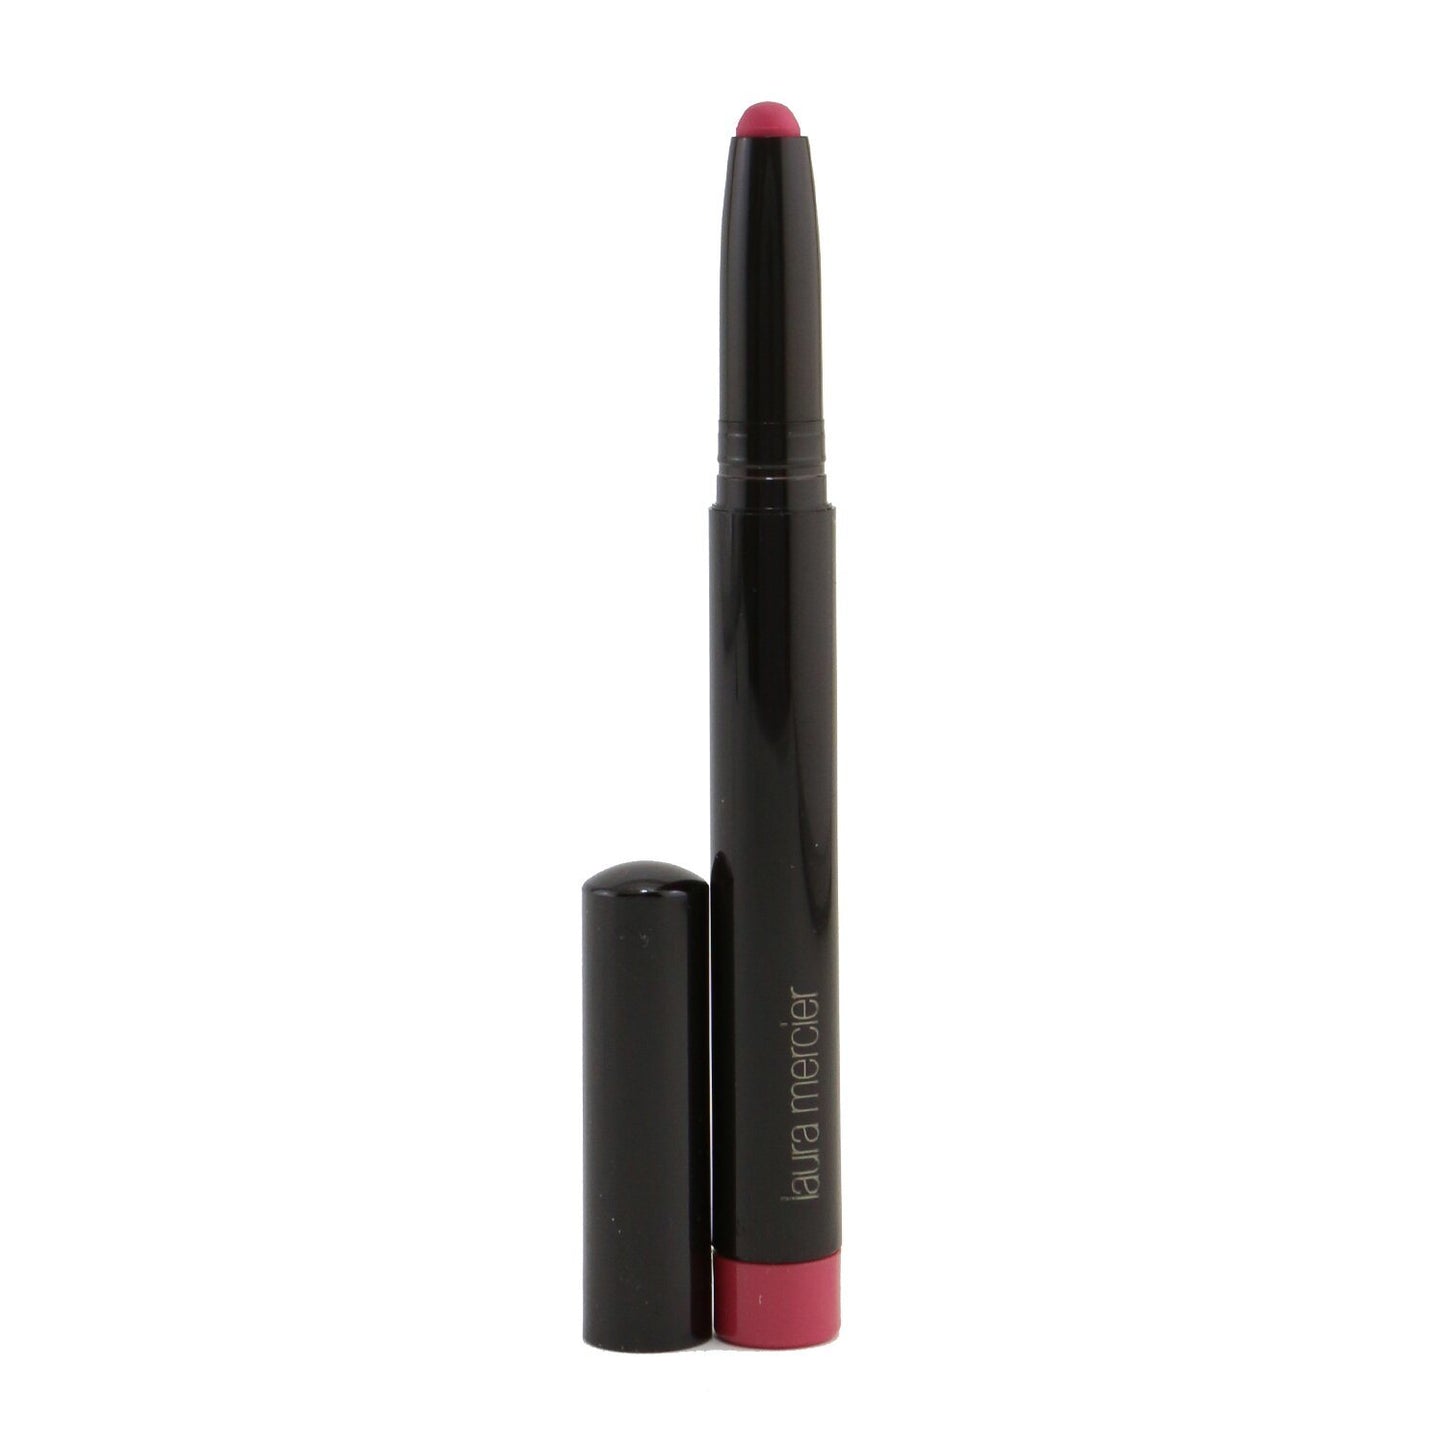 Velour Extreme Matte Lipstick - # Bring It (Bluish Pink) (Unboxed)